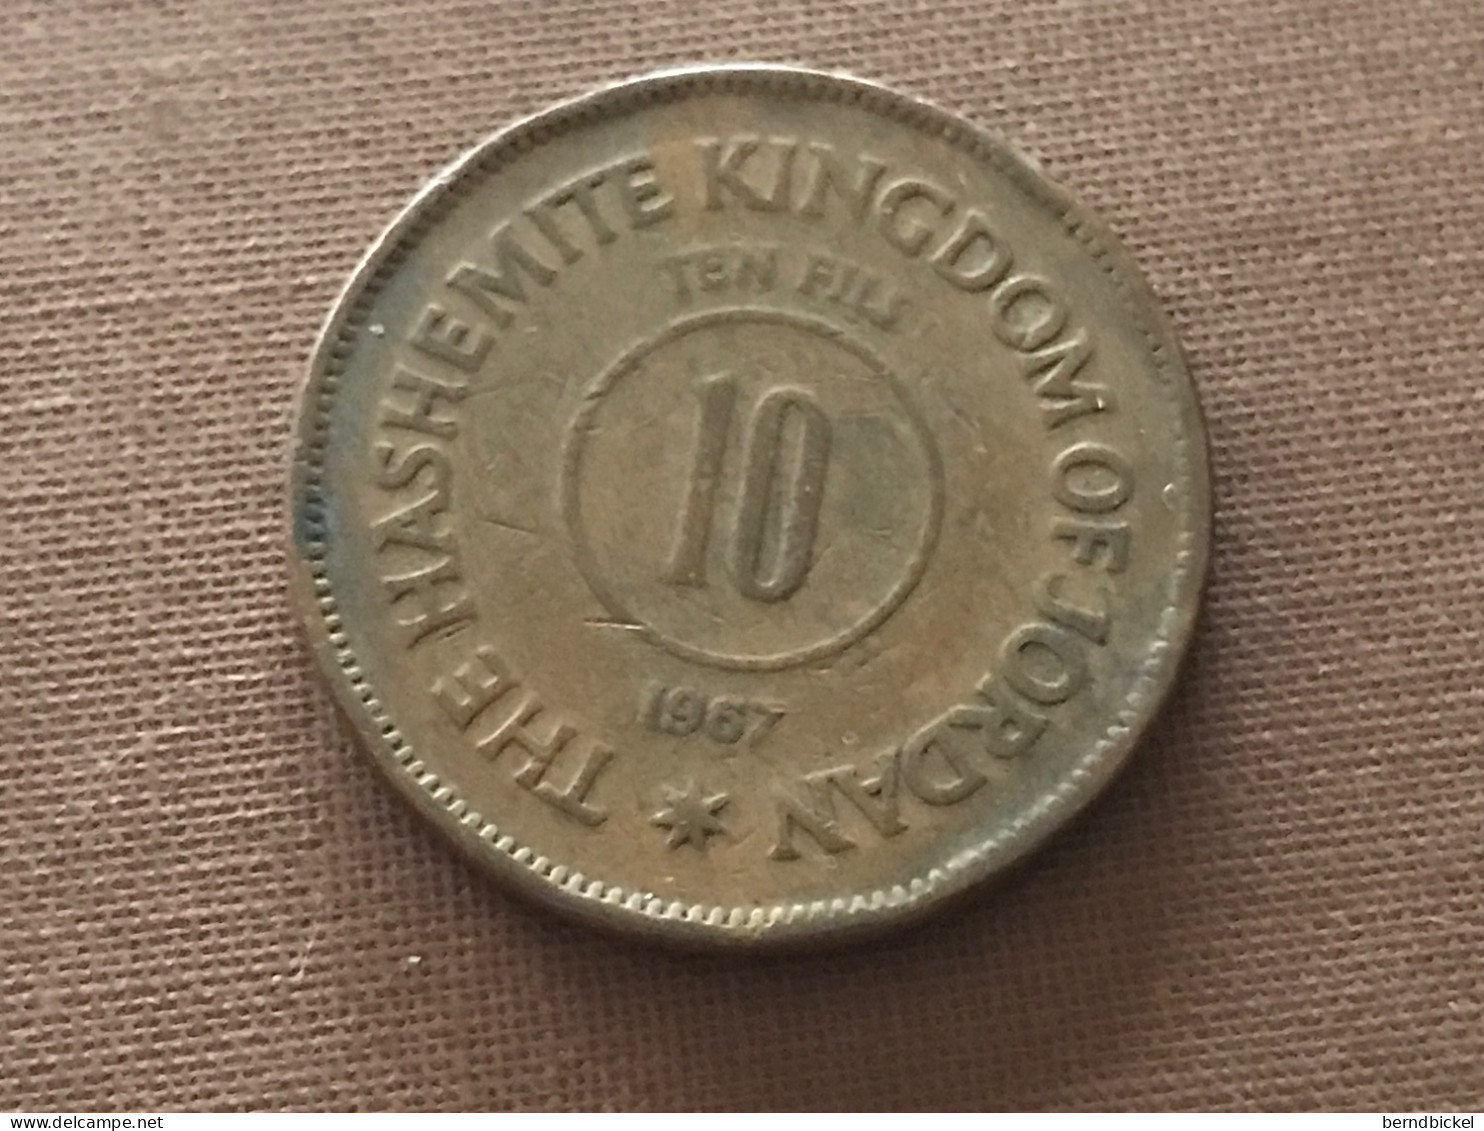 Münze Münzen Umlaufmünze Jordanien 10 Fils 1967 - Jordanie